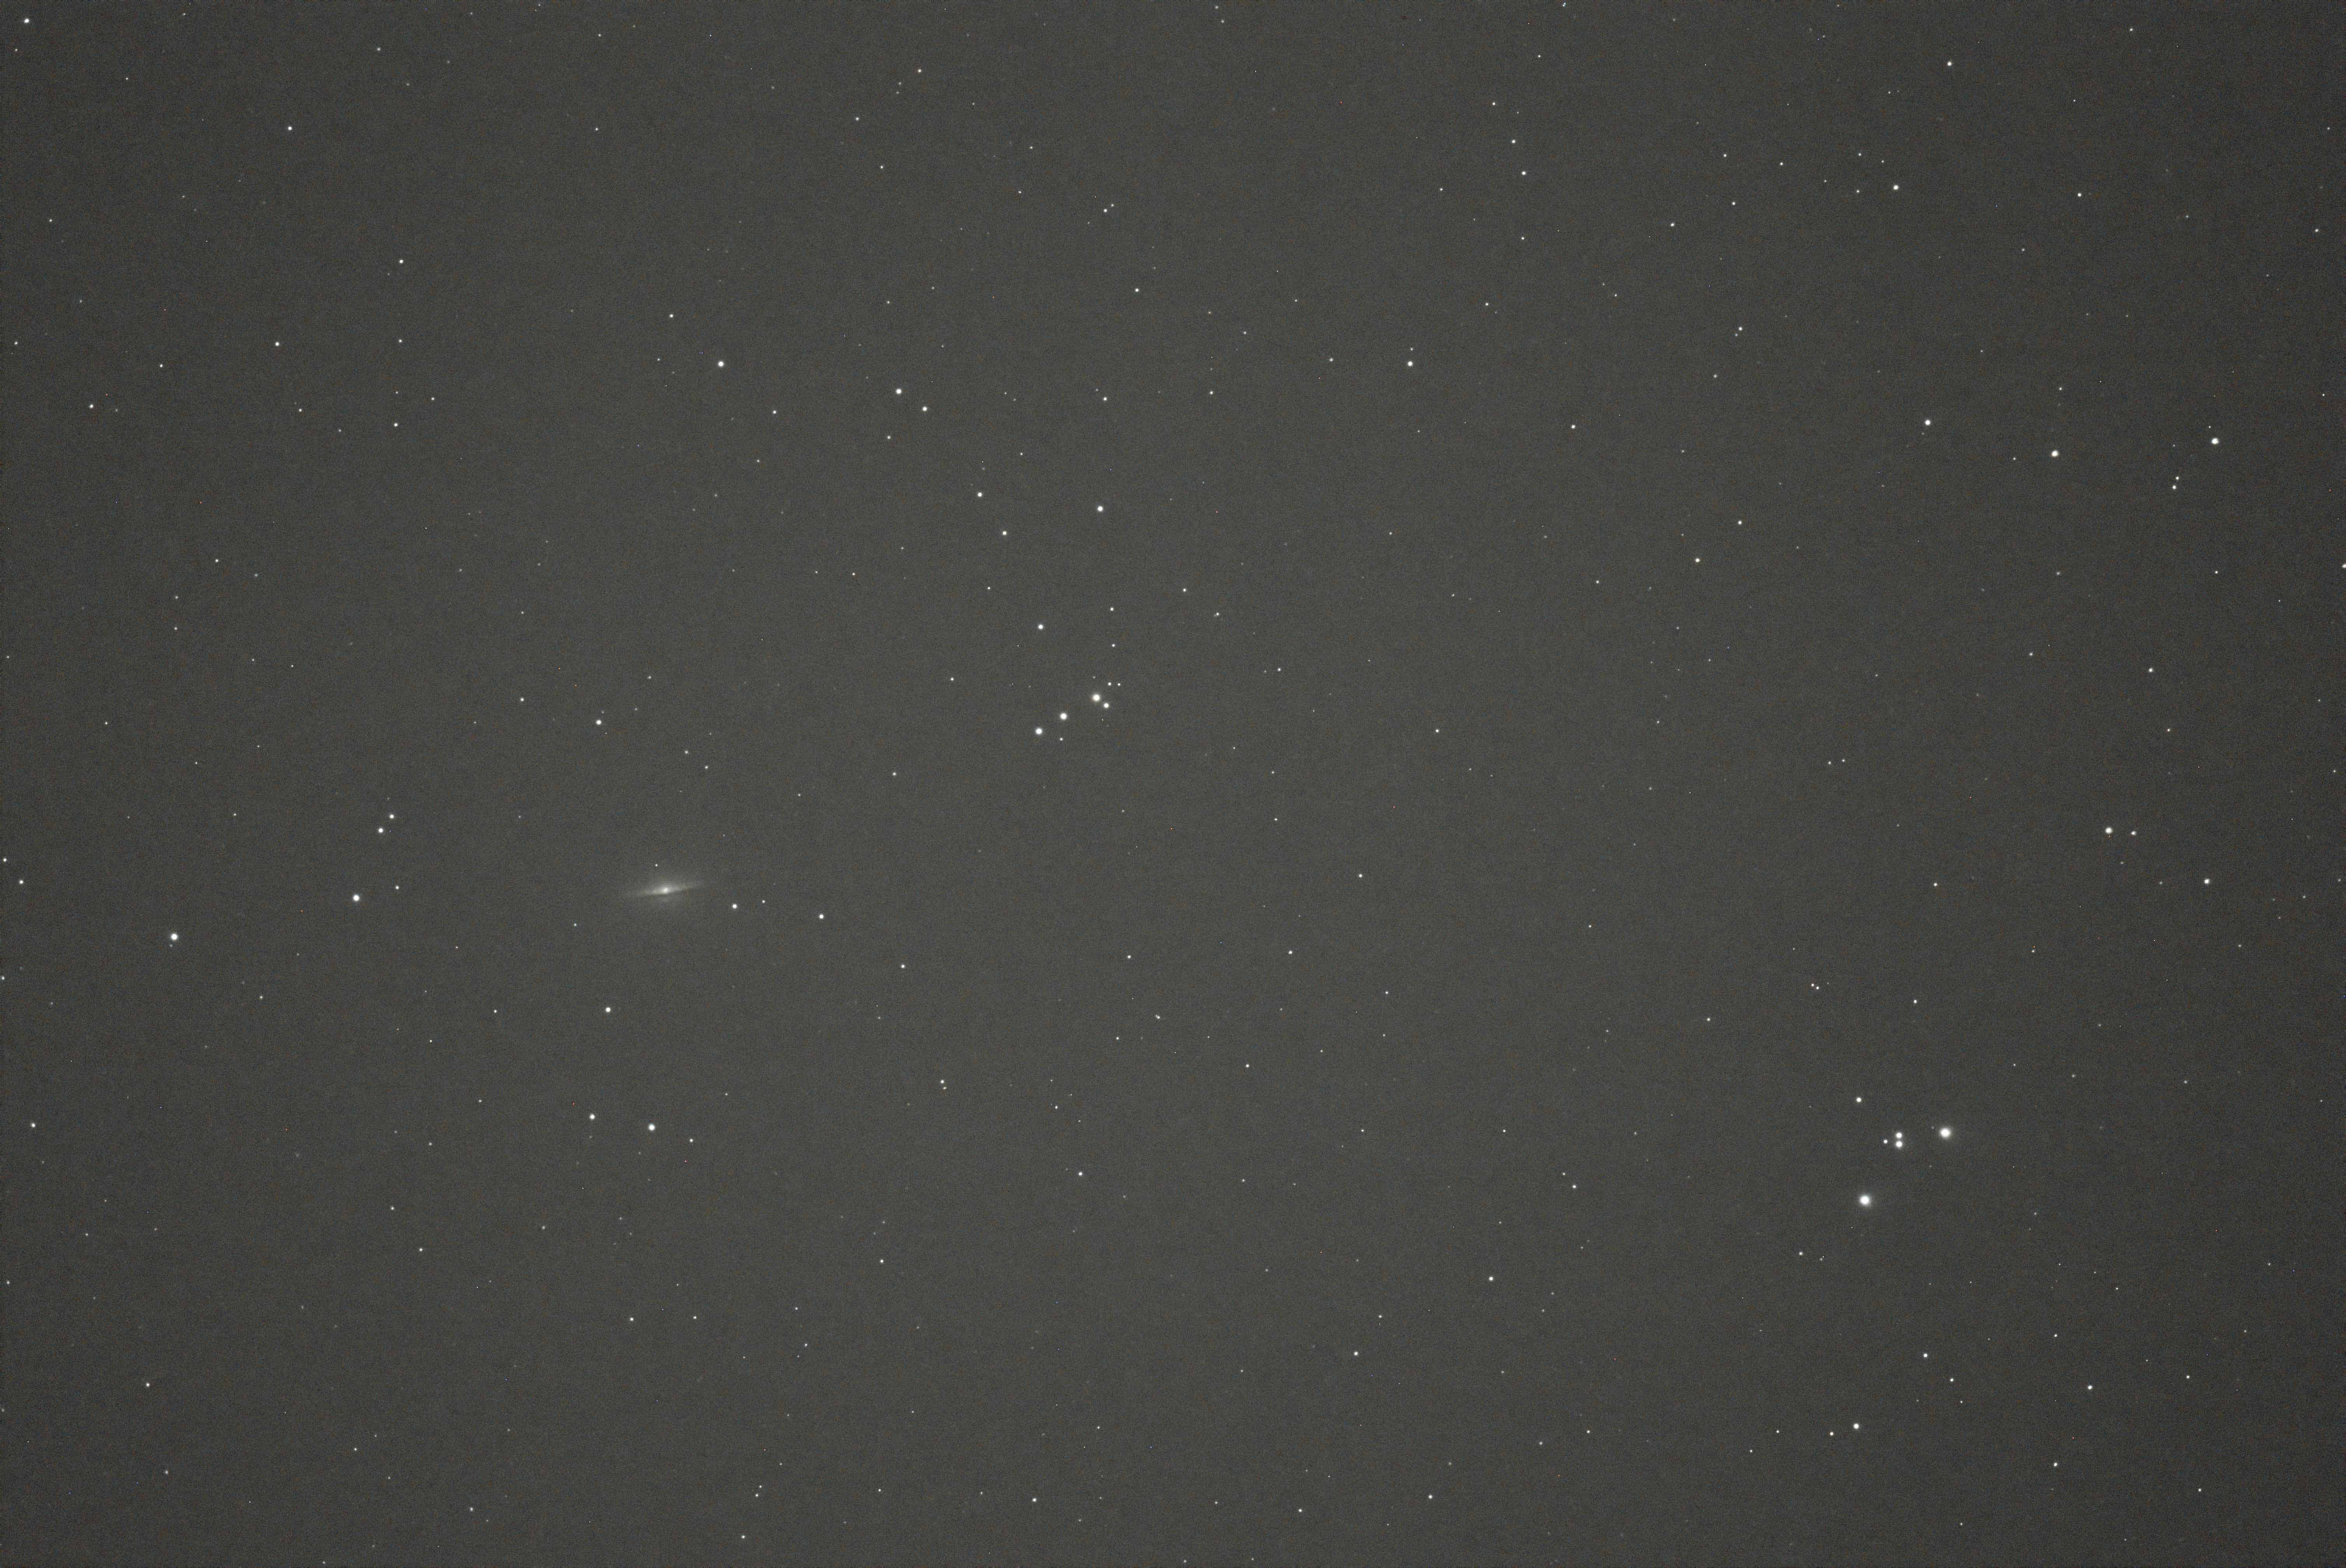 M104_corr.jpg